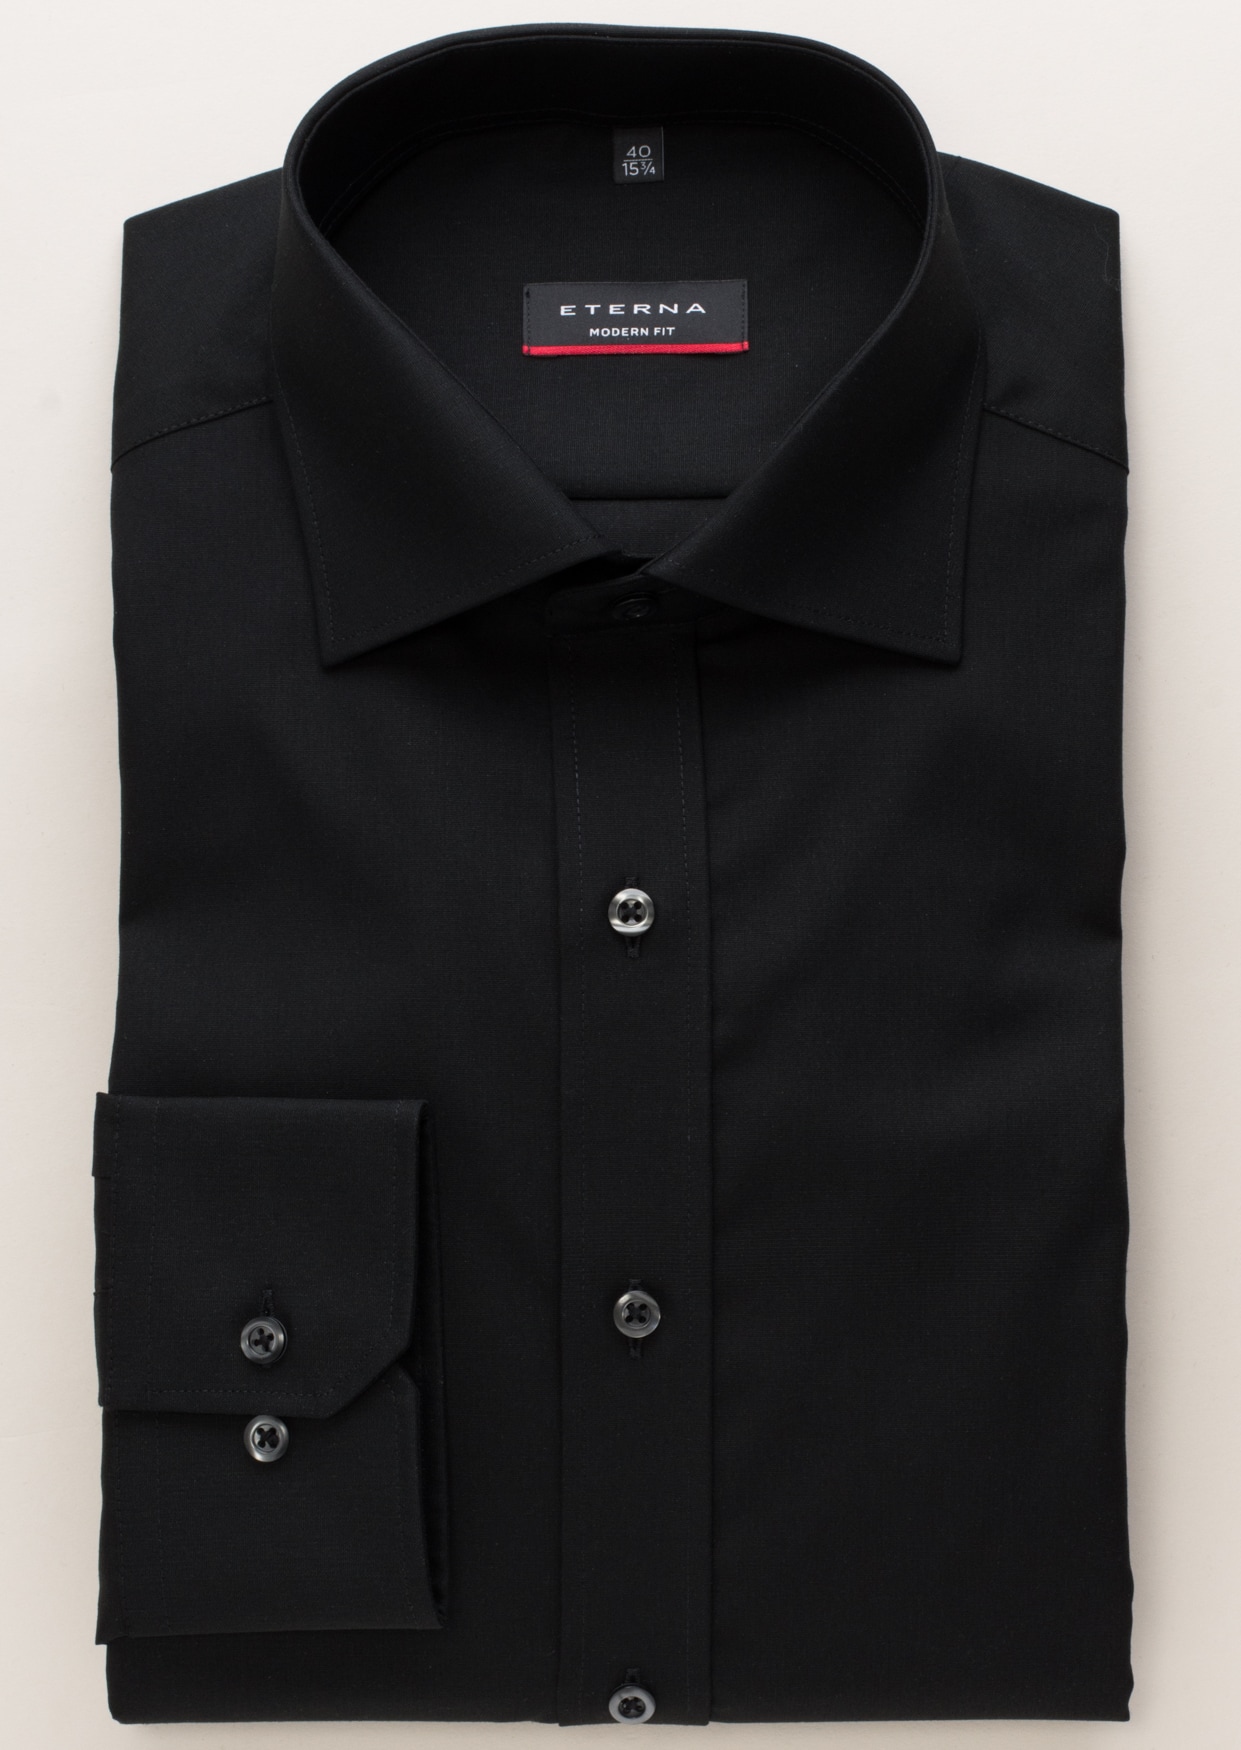 MODERN FIT Original Shirt in black plain | black | 42 | long sleeve |  1SH00113-03-91-42-1/1